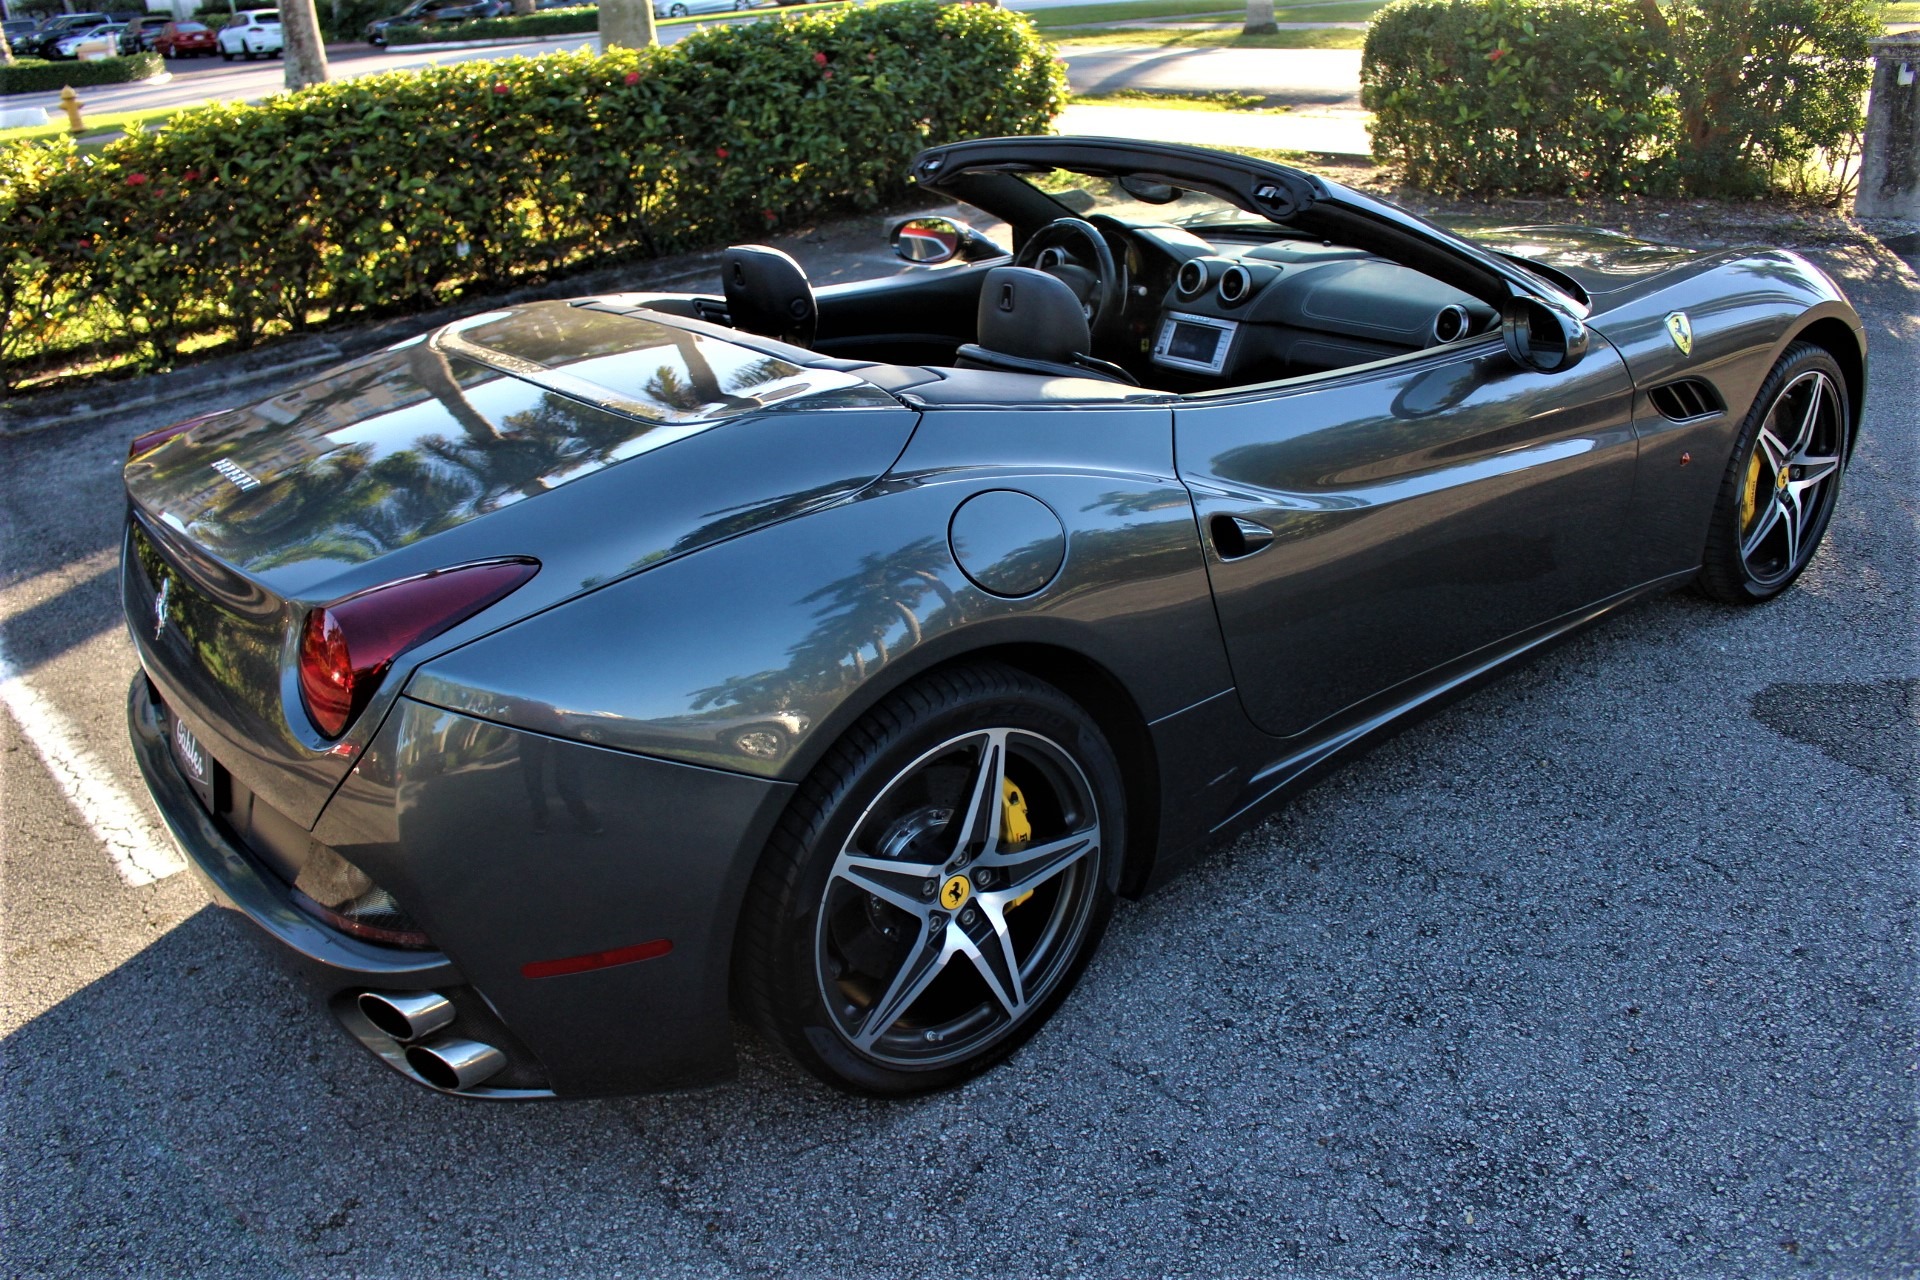 Used 2011 Ferrari California for sale $105,850 at The Gables Sports Cars in Miami FL 33146 4